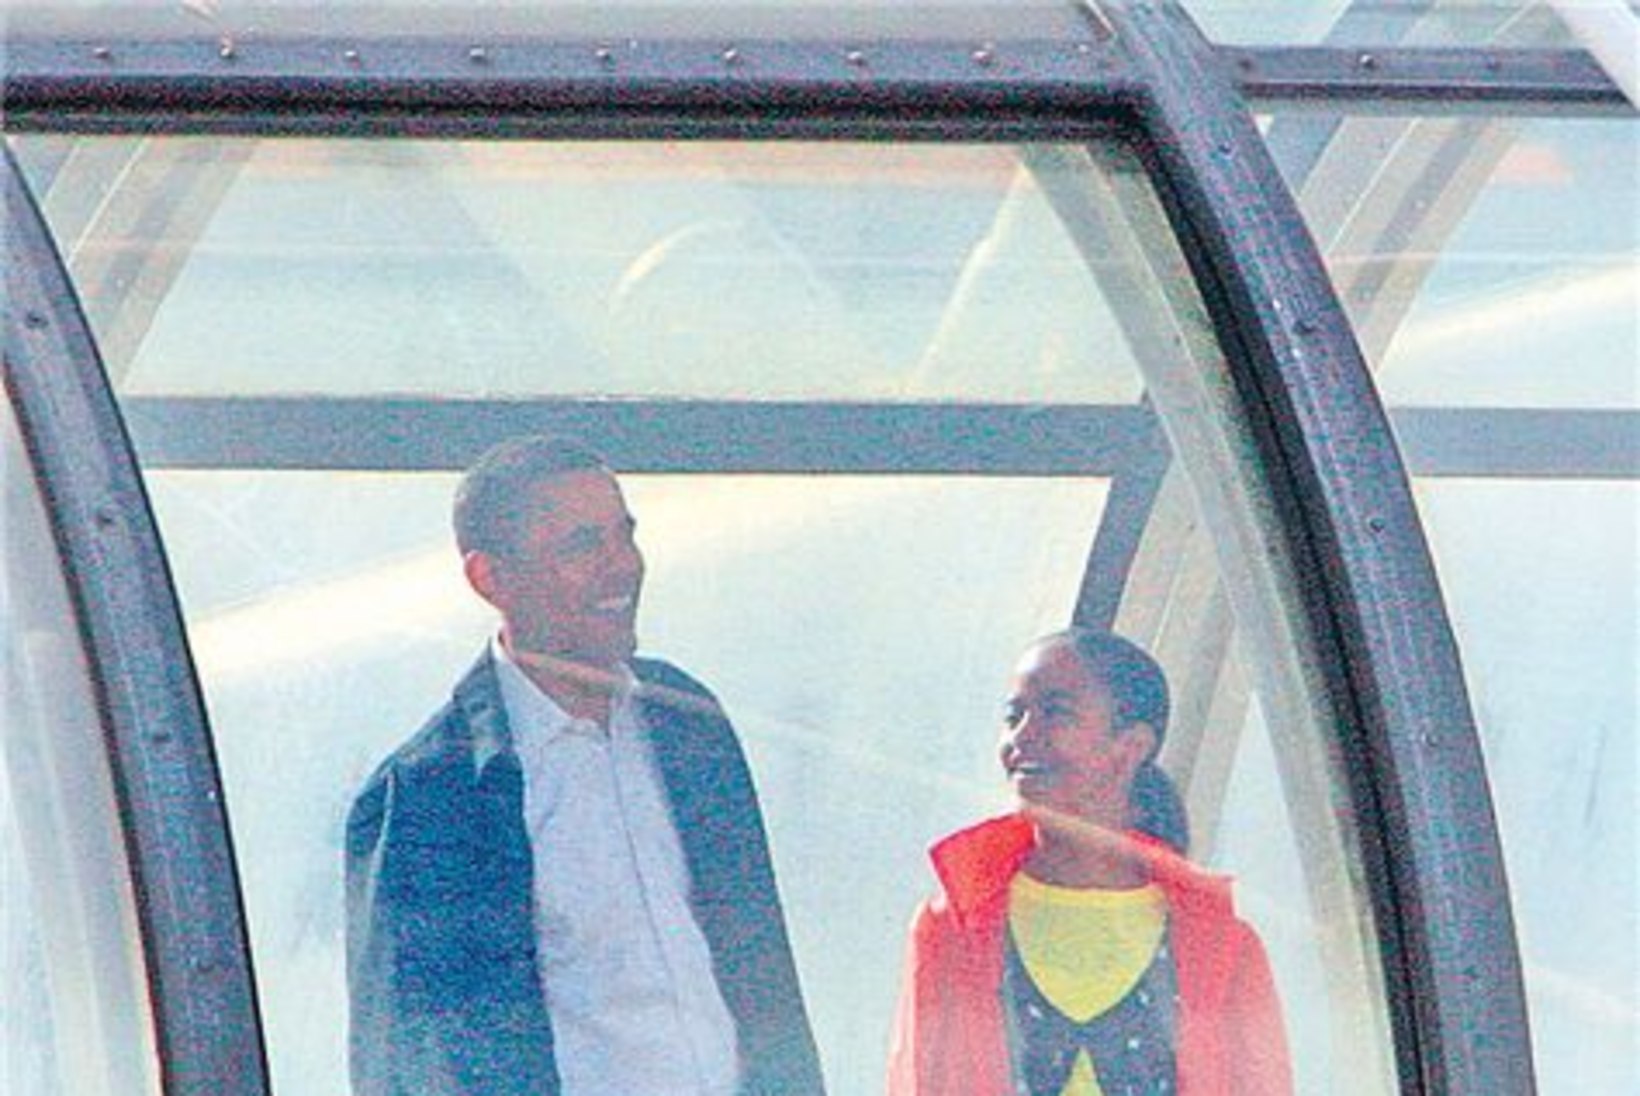 Barack Obama pere turistidena Pariisi avastamas